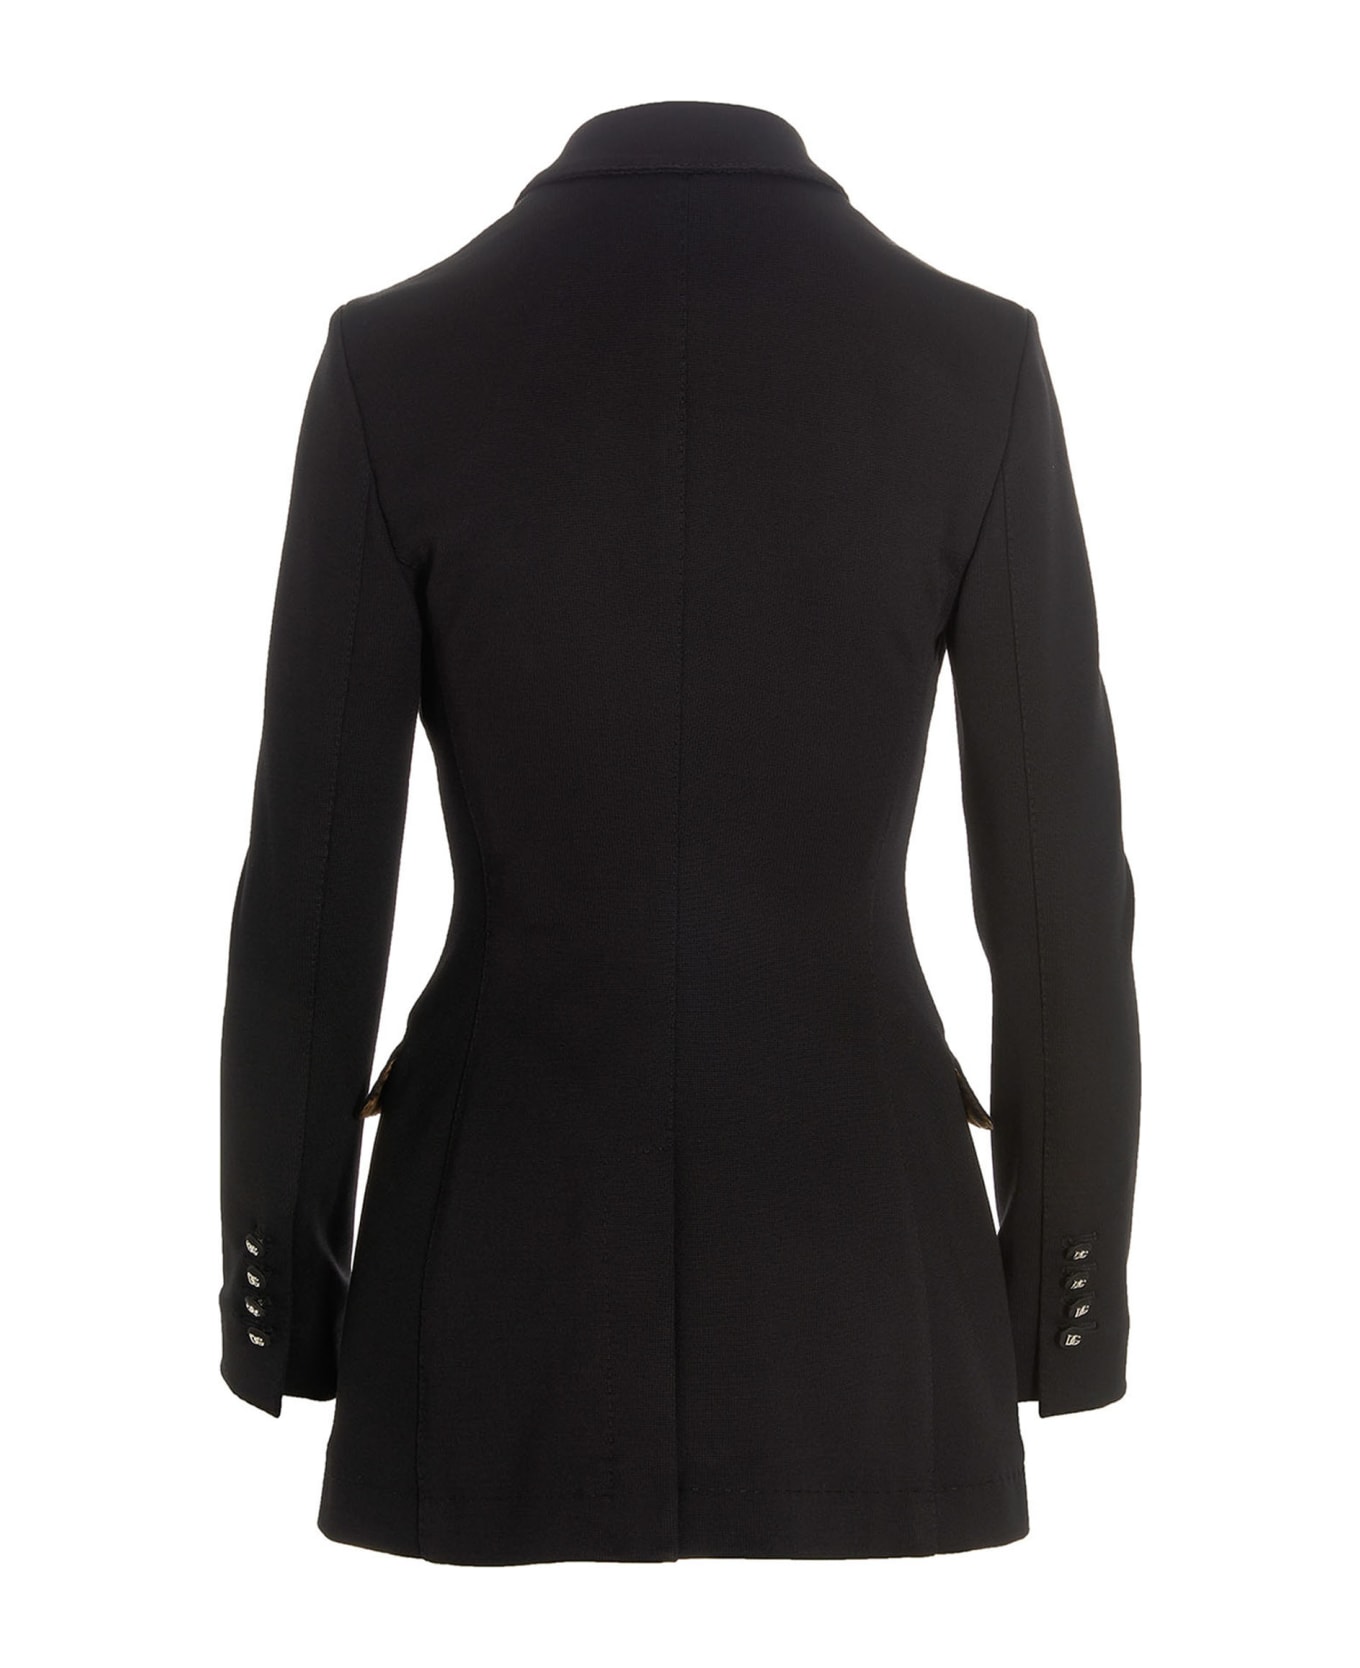 Dolce & Gabbana Milan Point Blazer Jacket - Black  